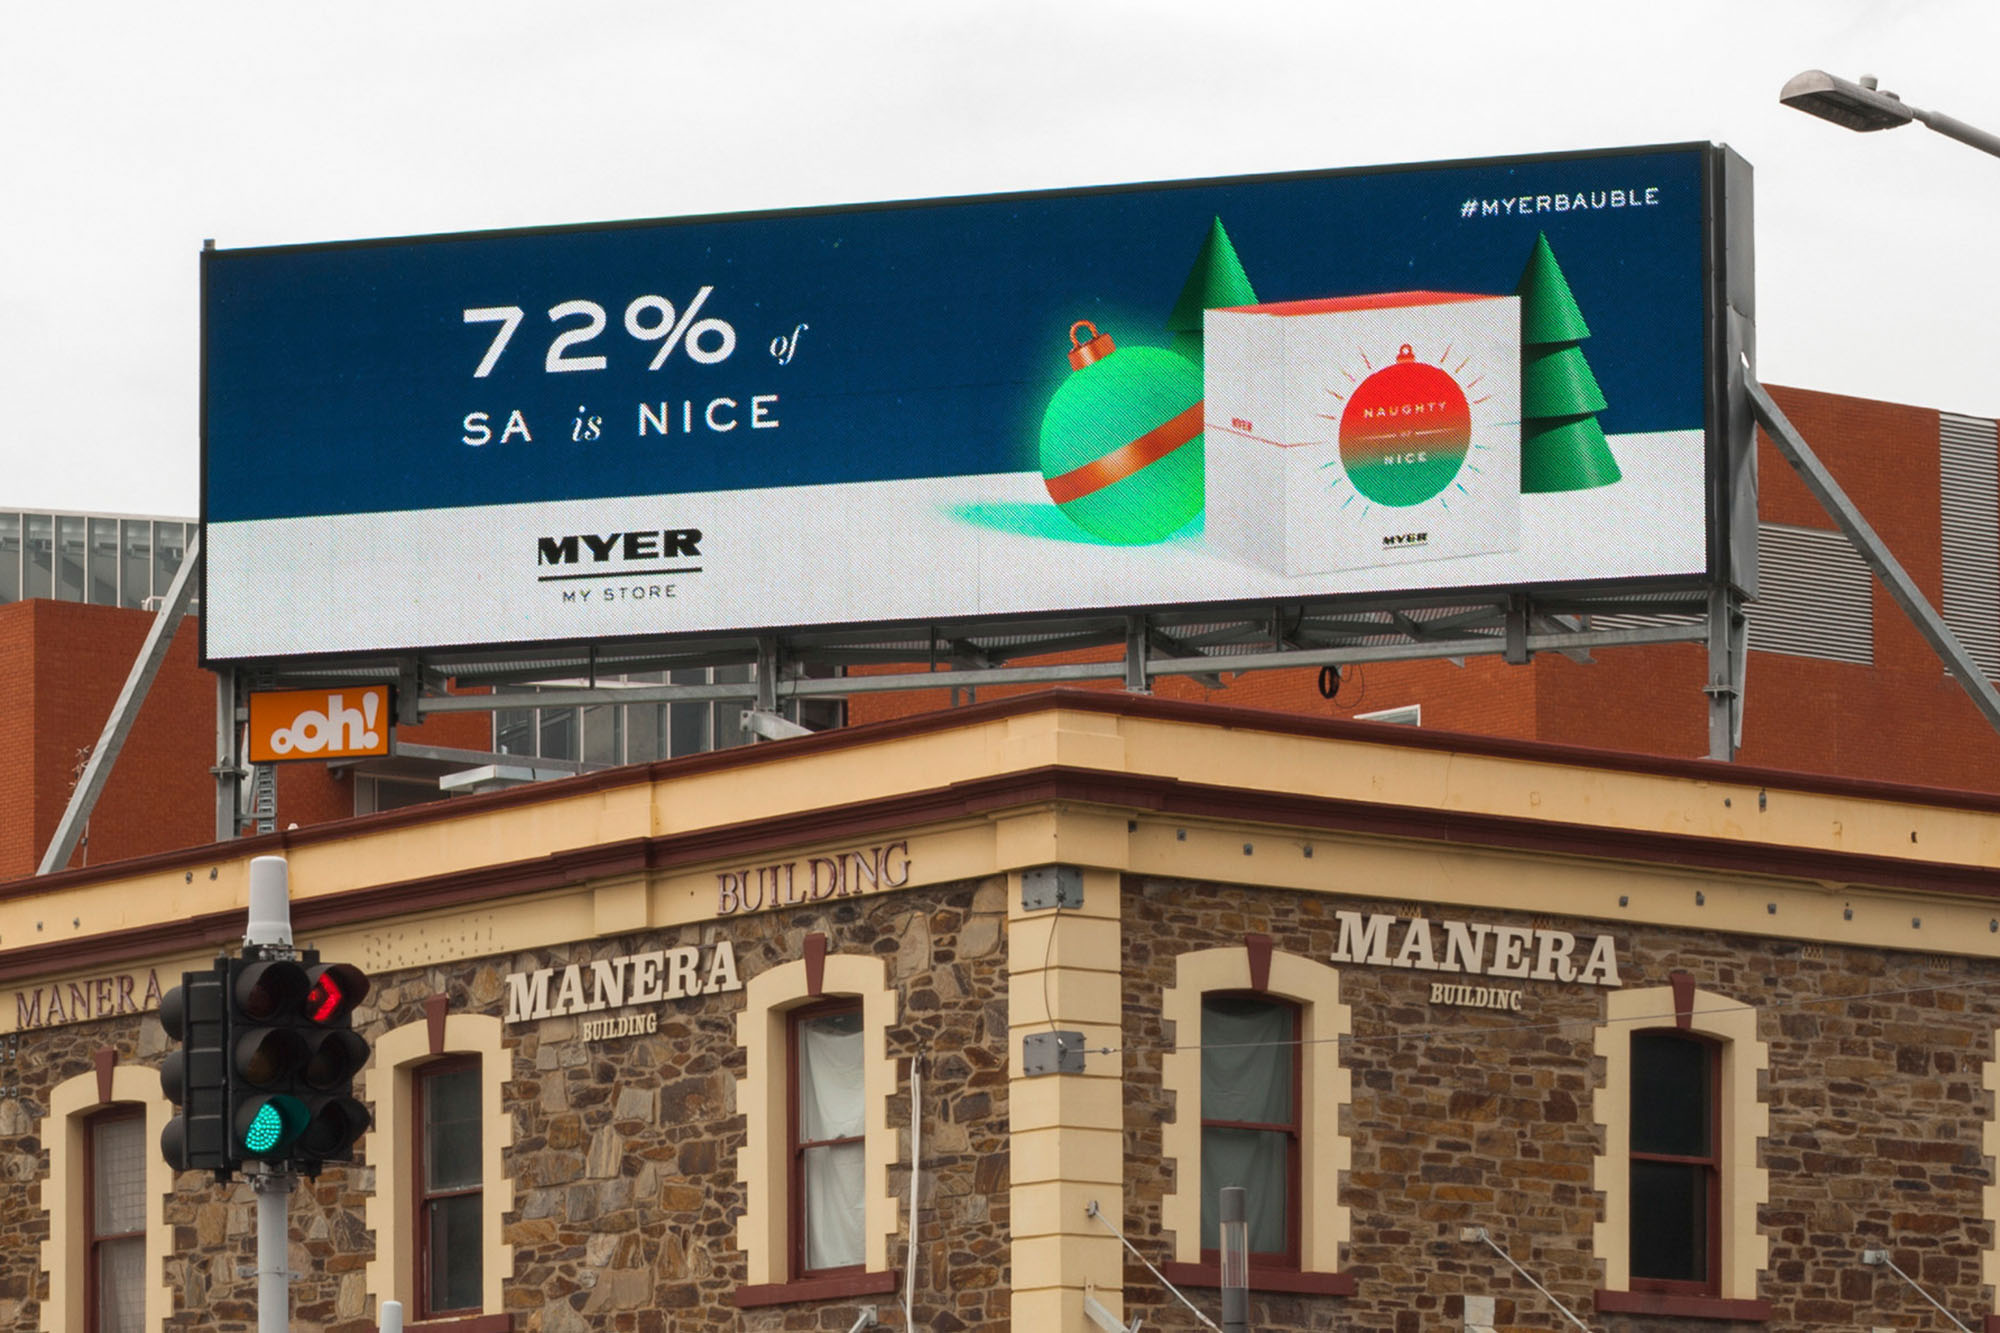 Myer dynamic billboard advertising